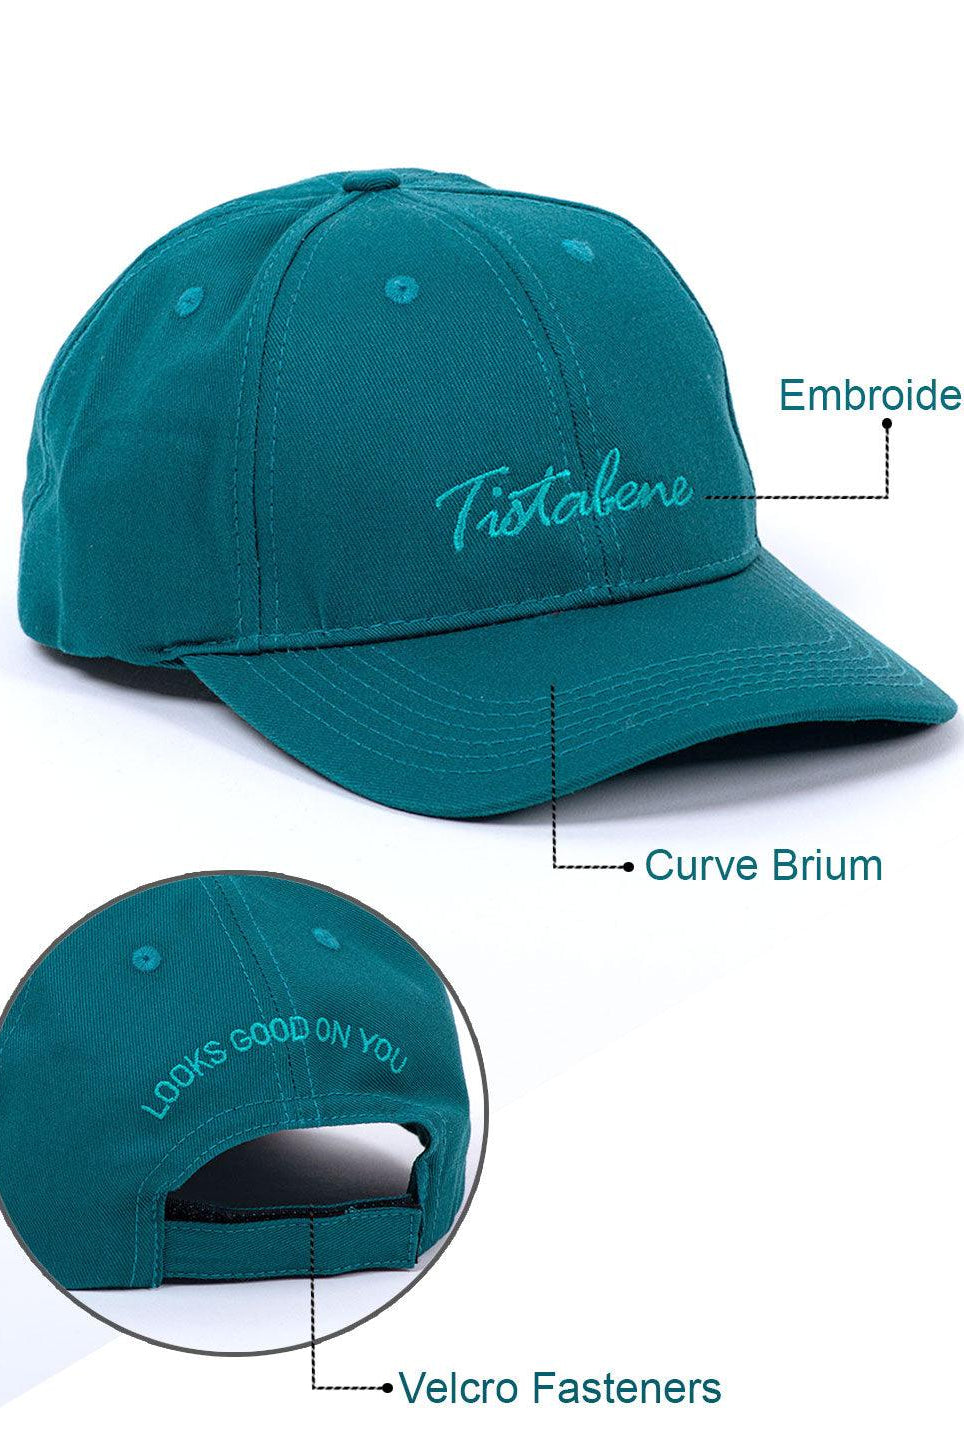 Tistabene Embroidered Teal Blue Free Size Unisex Baseball Caps - Tistabene